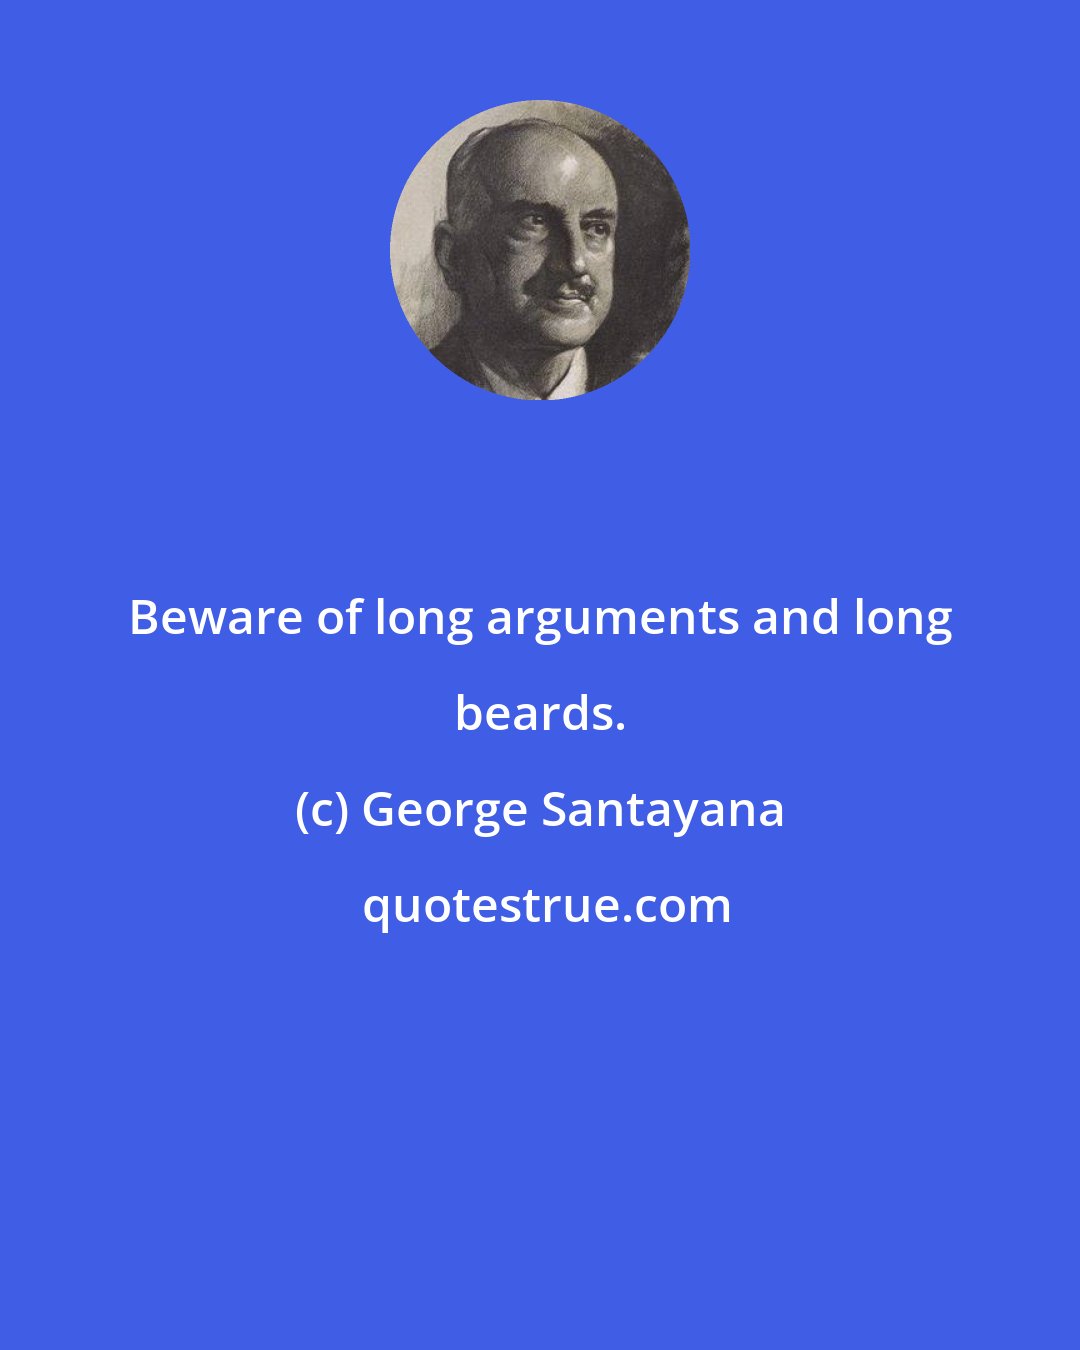 George Santayana: Beware of long arguments and long beards.